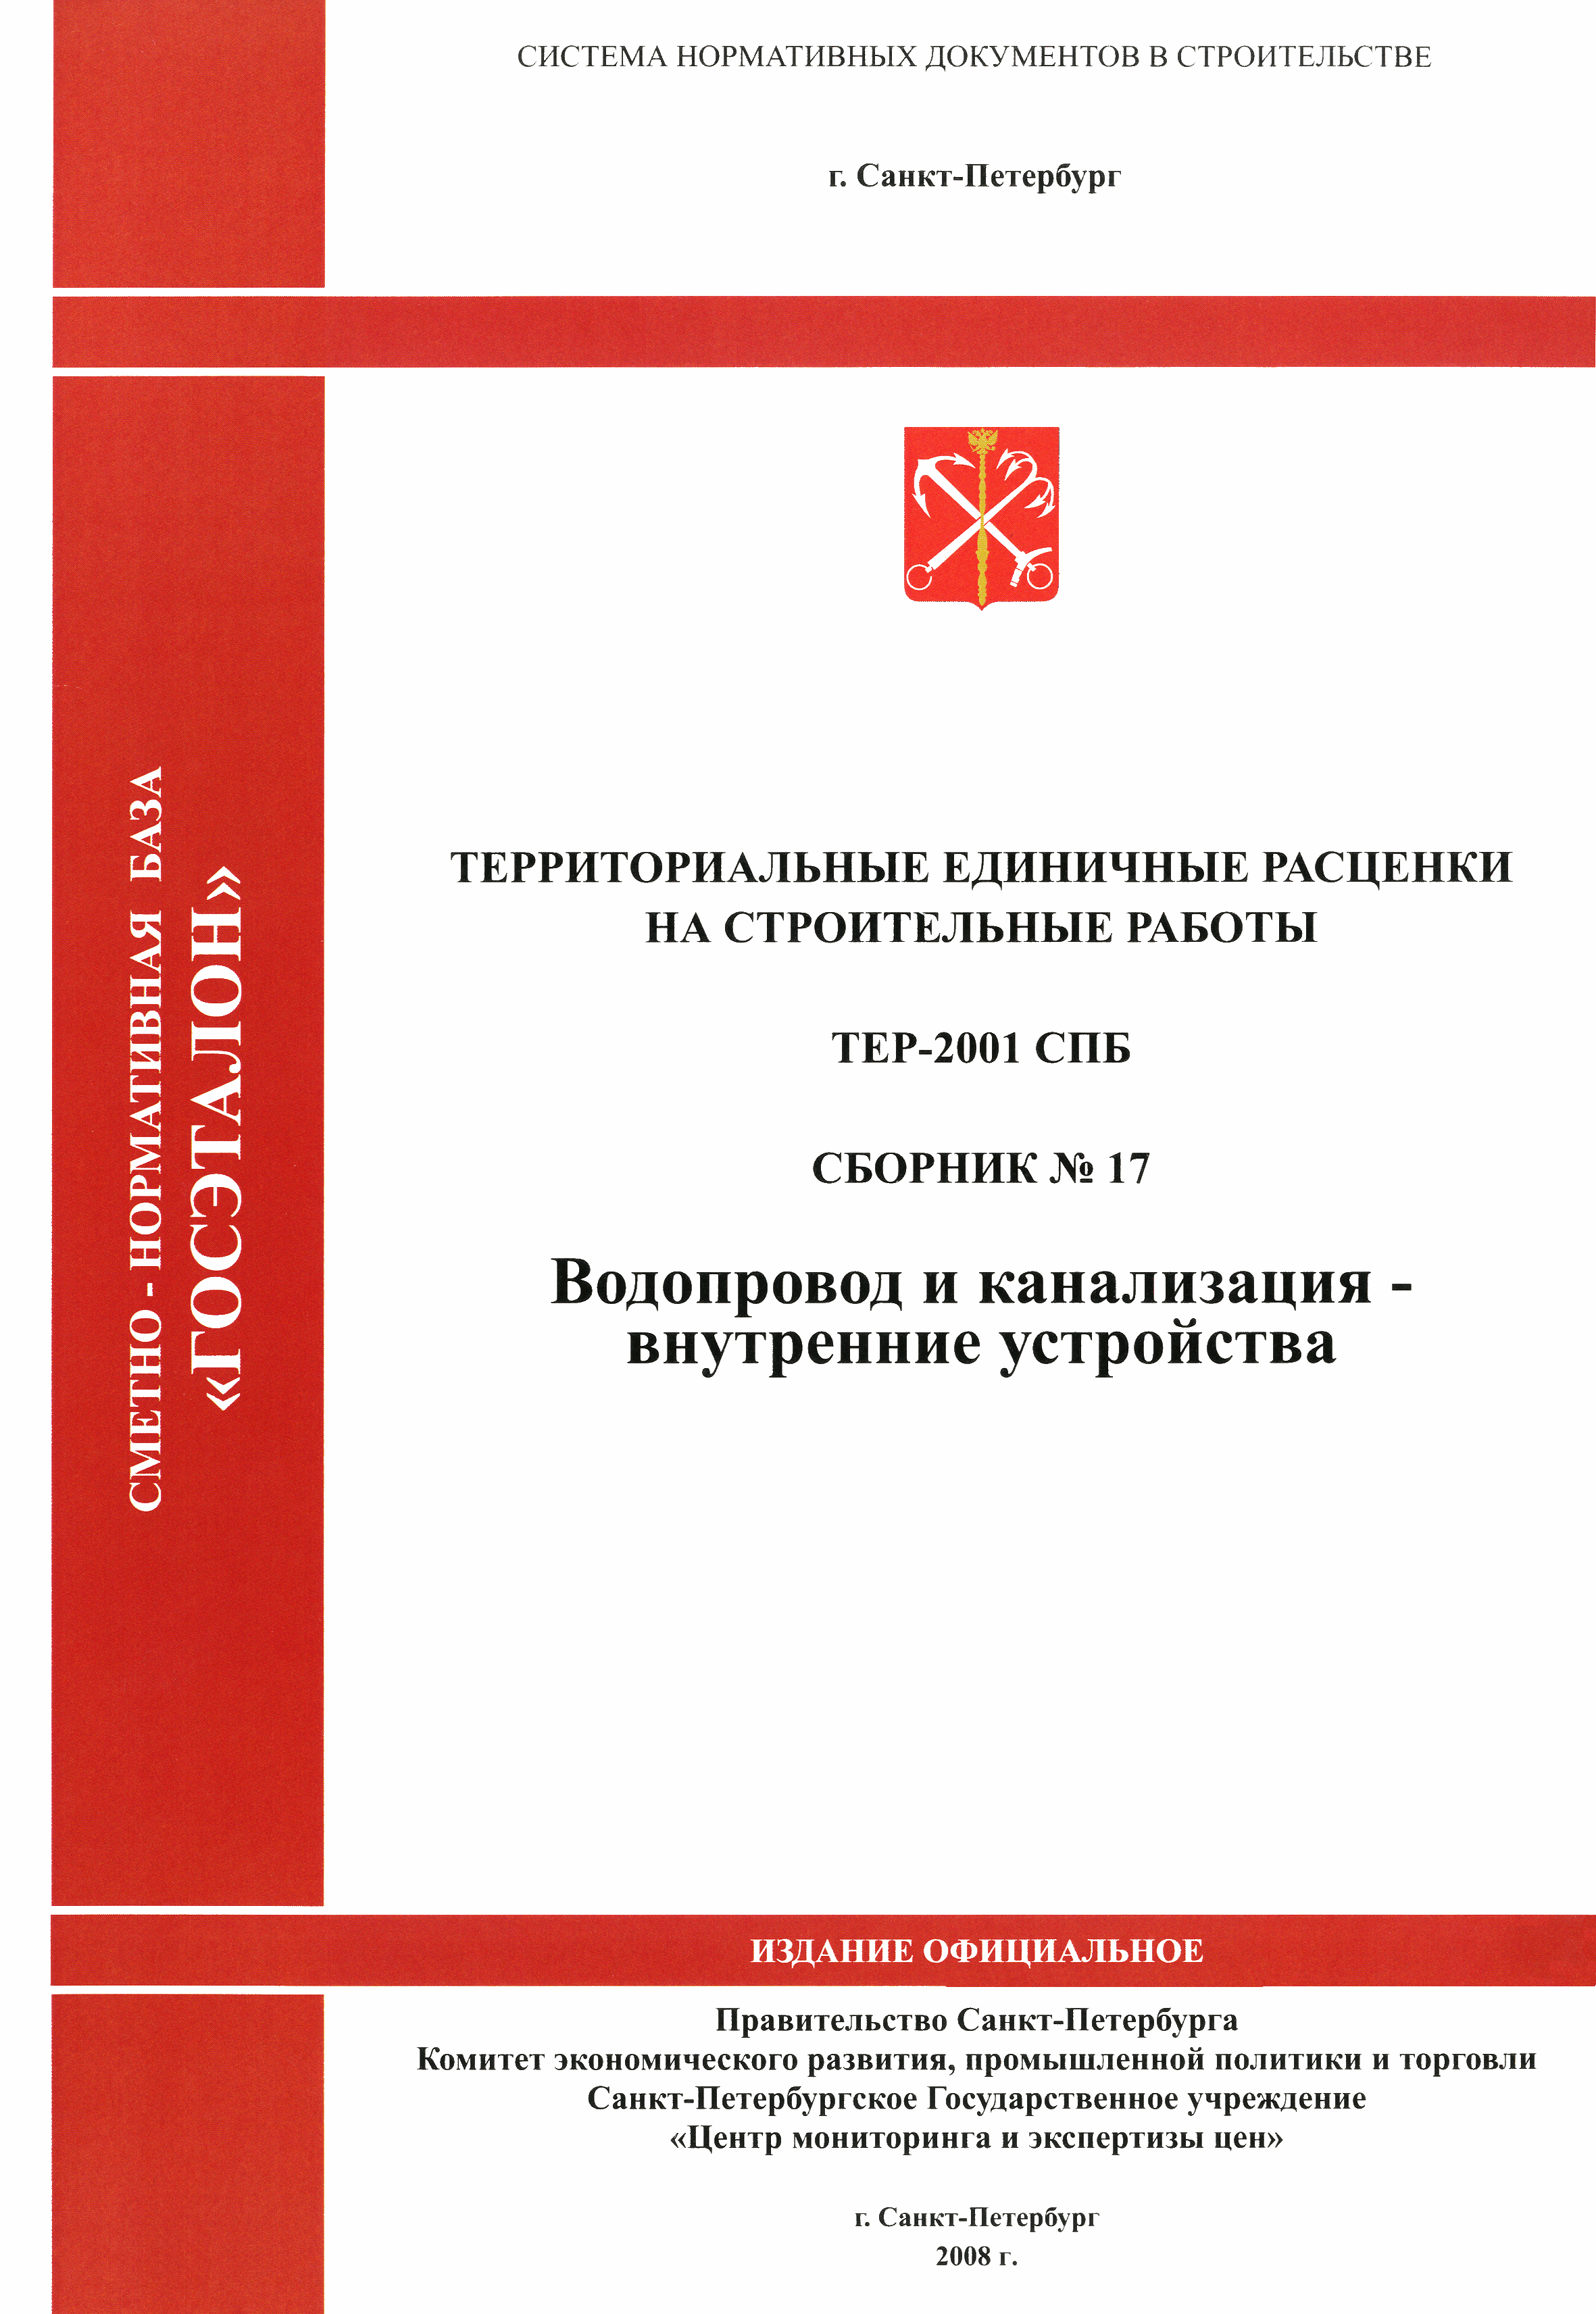 ТЕР 2001-17 СПб